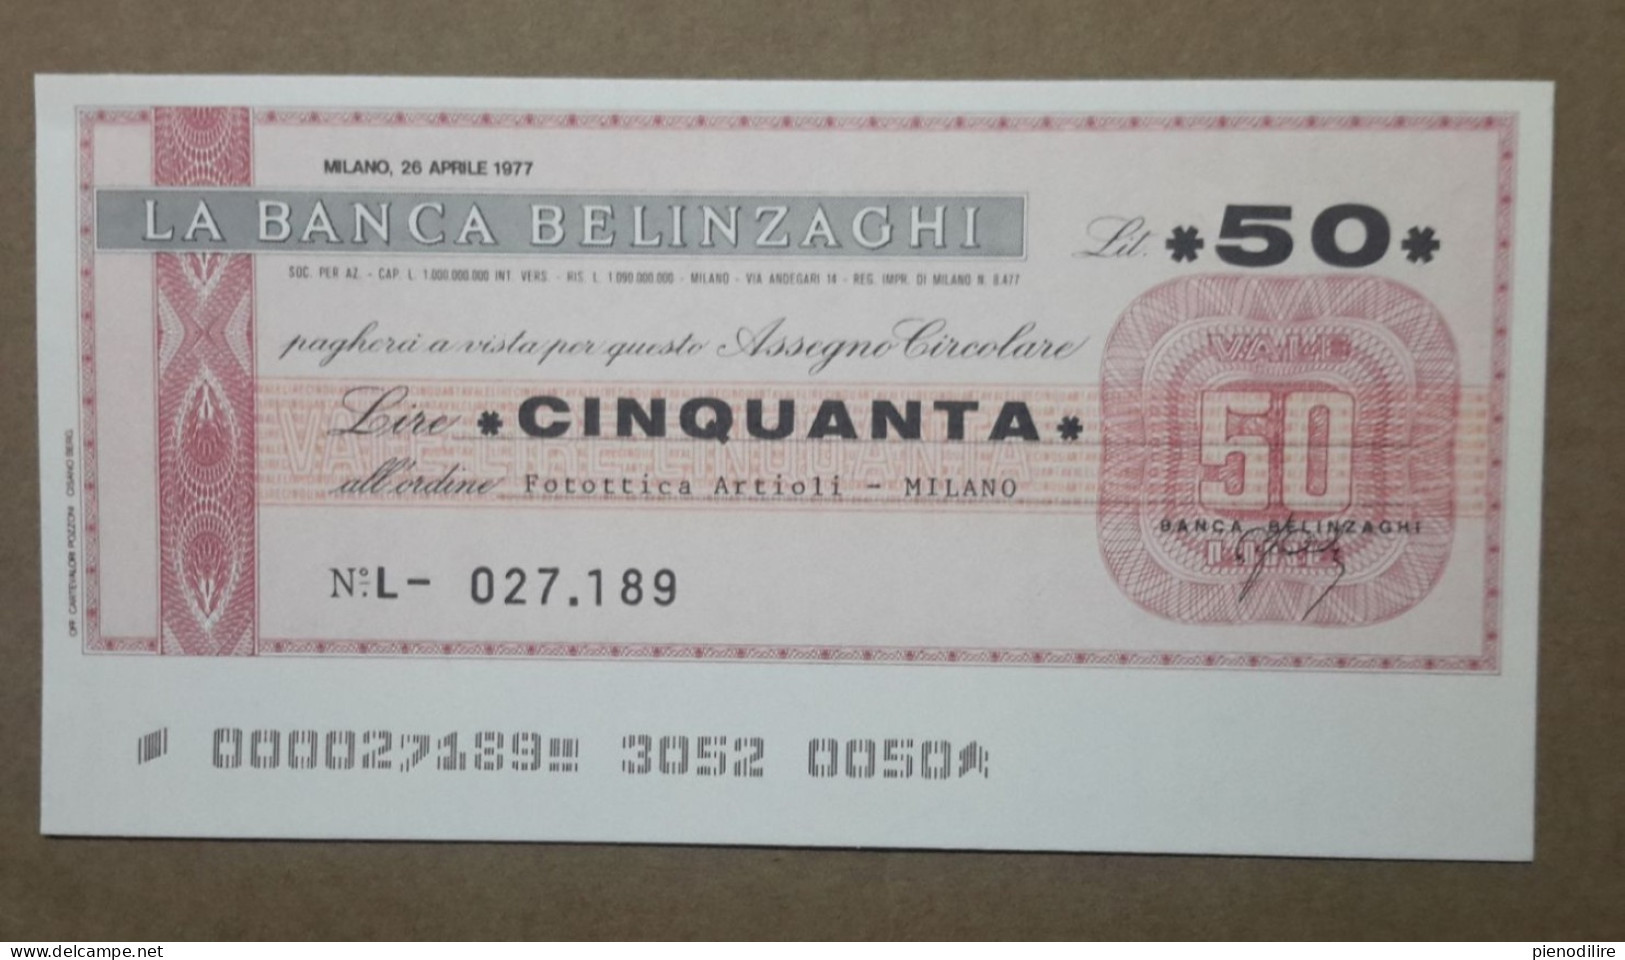 BANCA BELINZAGHI, 50 LIRE 26.04.1977 FOTOTTICA ARTIOLI MILANO (A1.80) - [10] Chèques